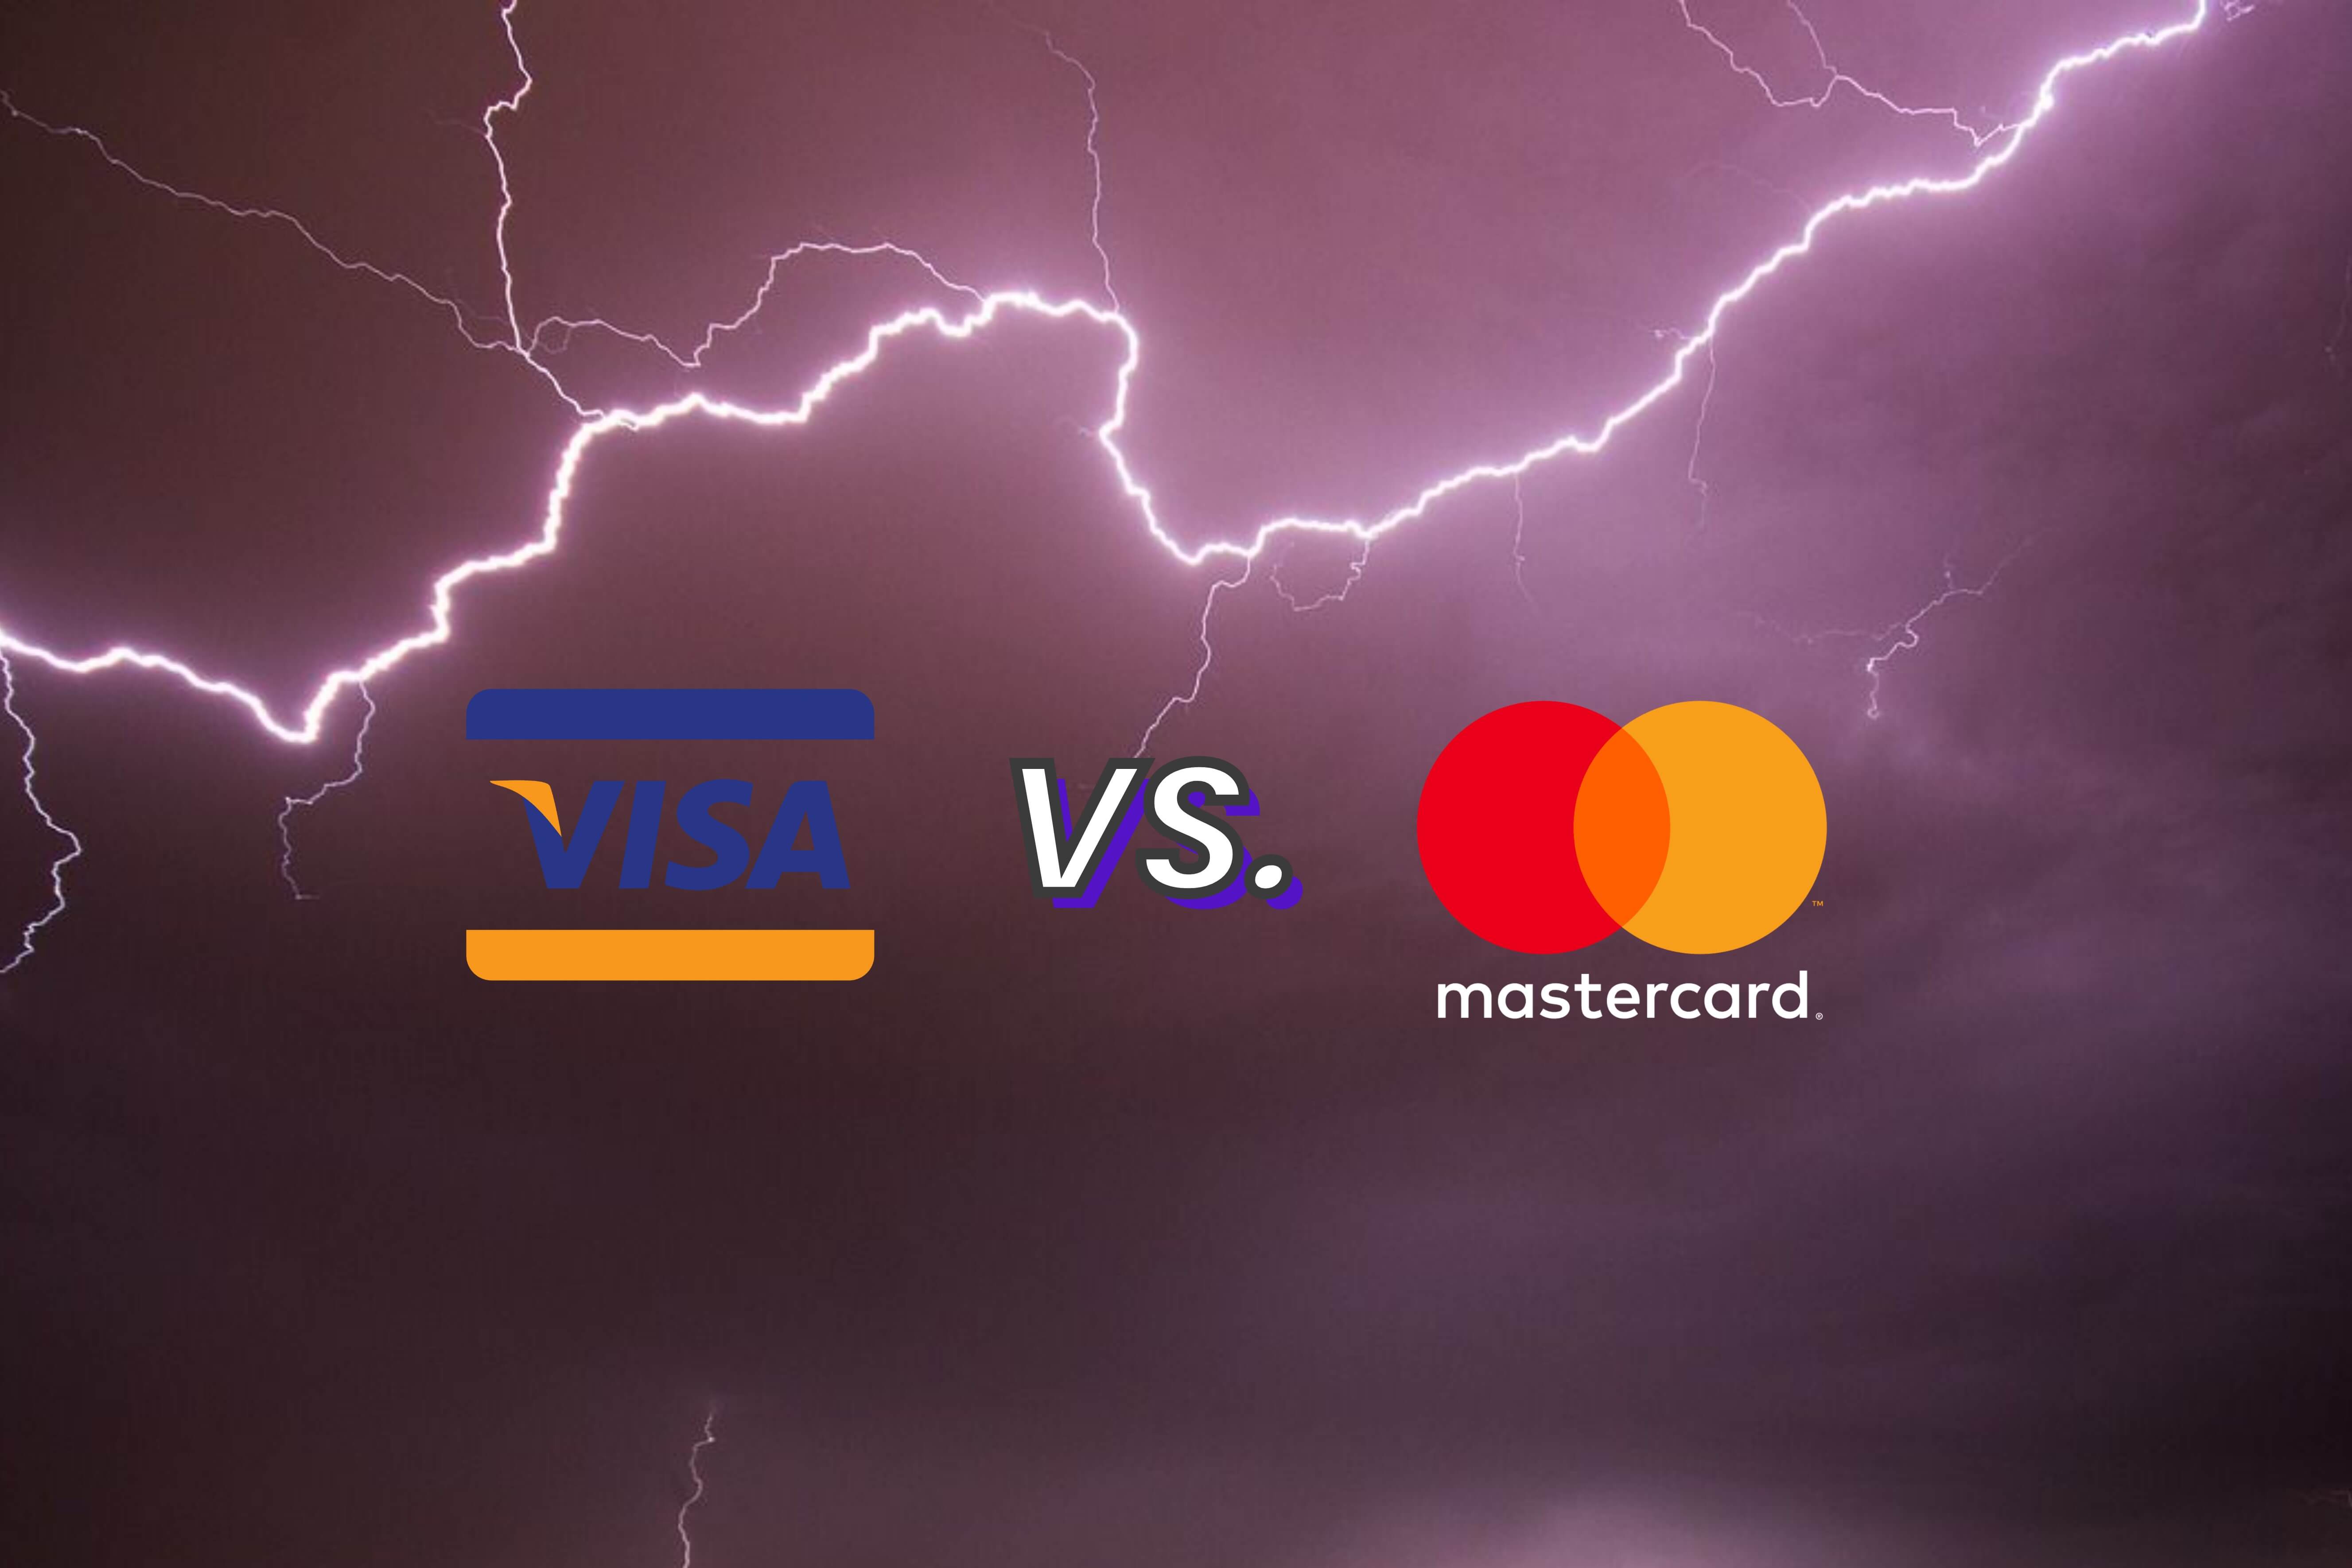 NYSE:V vs NYSE:MA: Stock Comparison of Visa and Mastercard